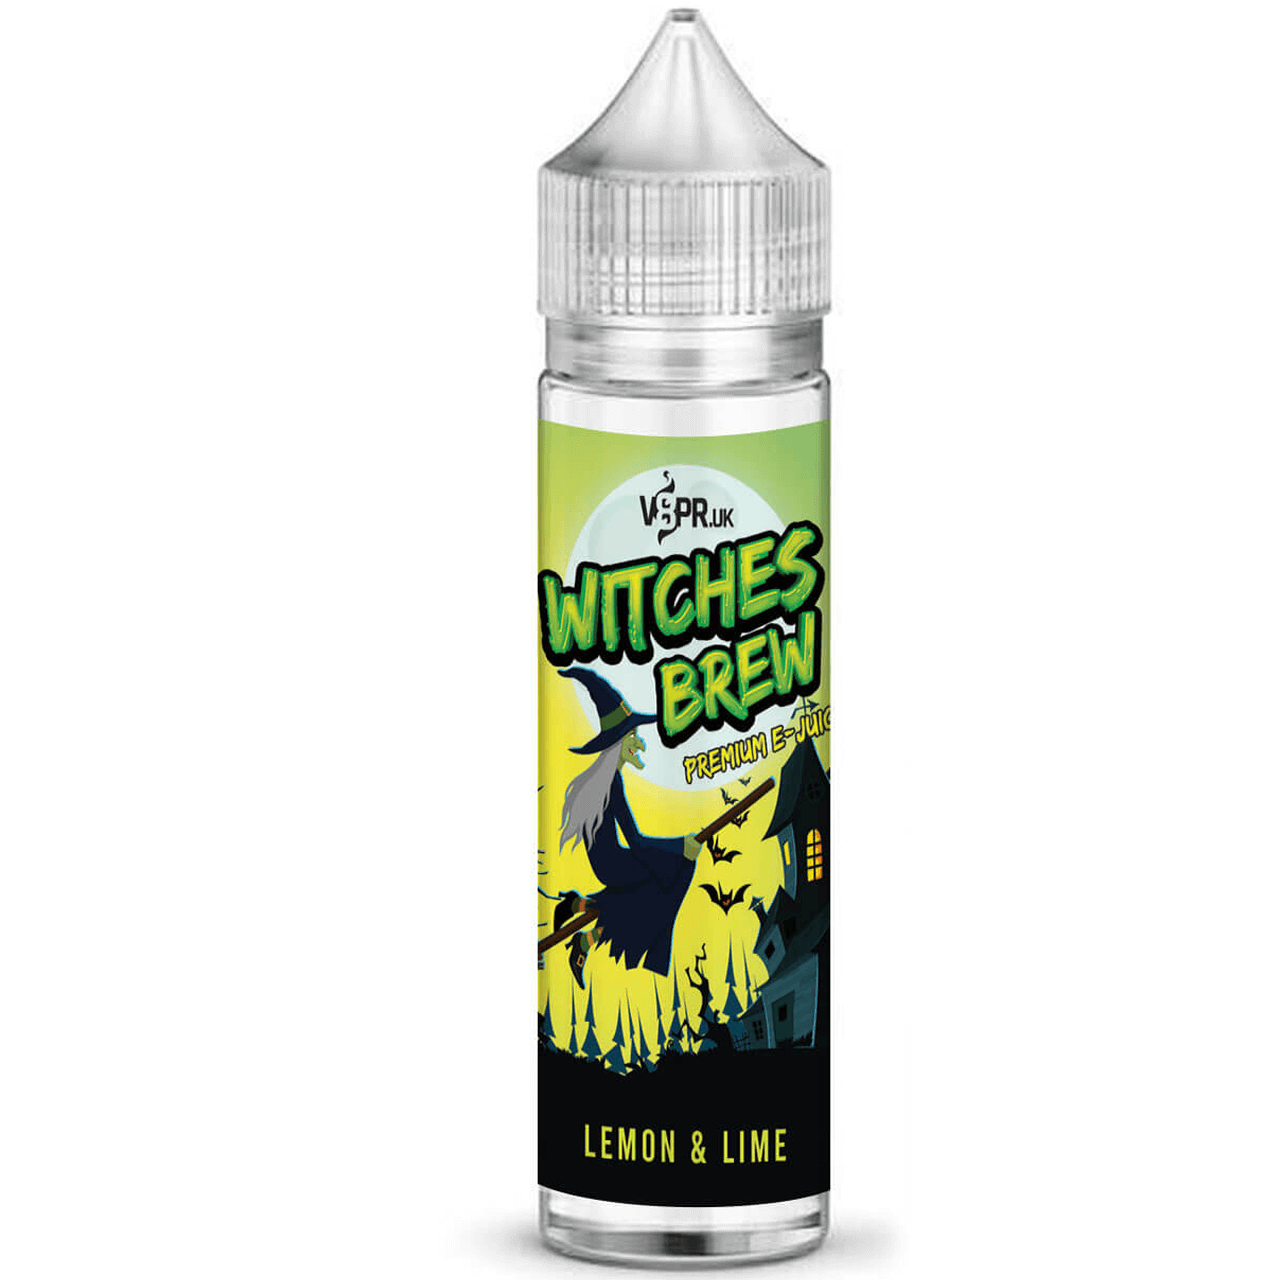 Witches Brew Lemon & Lime Shortfill eJuice - 50ml - V8PR.uk